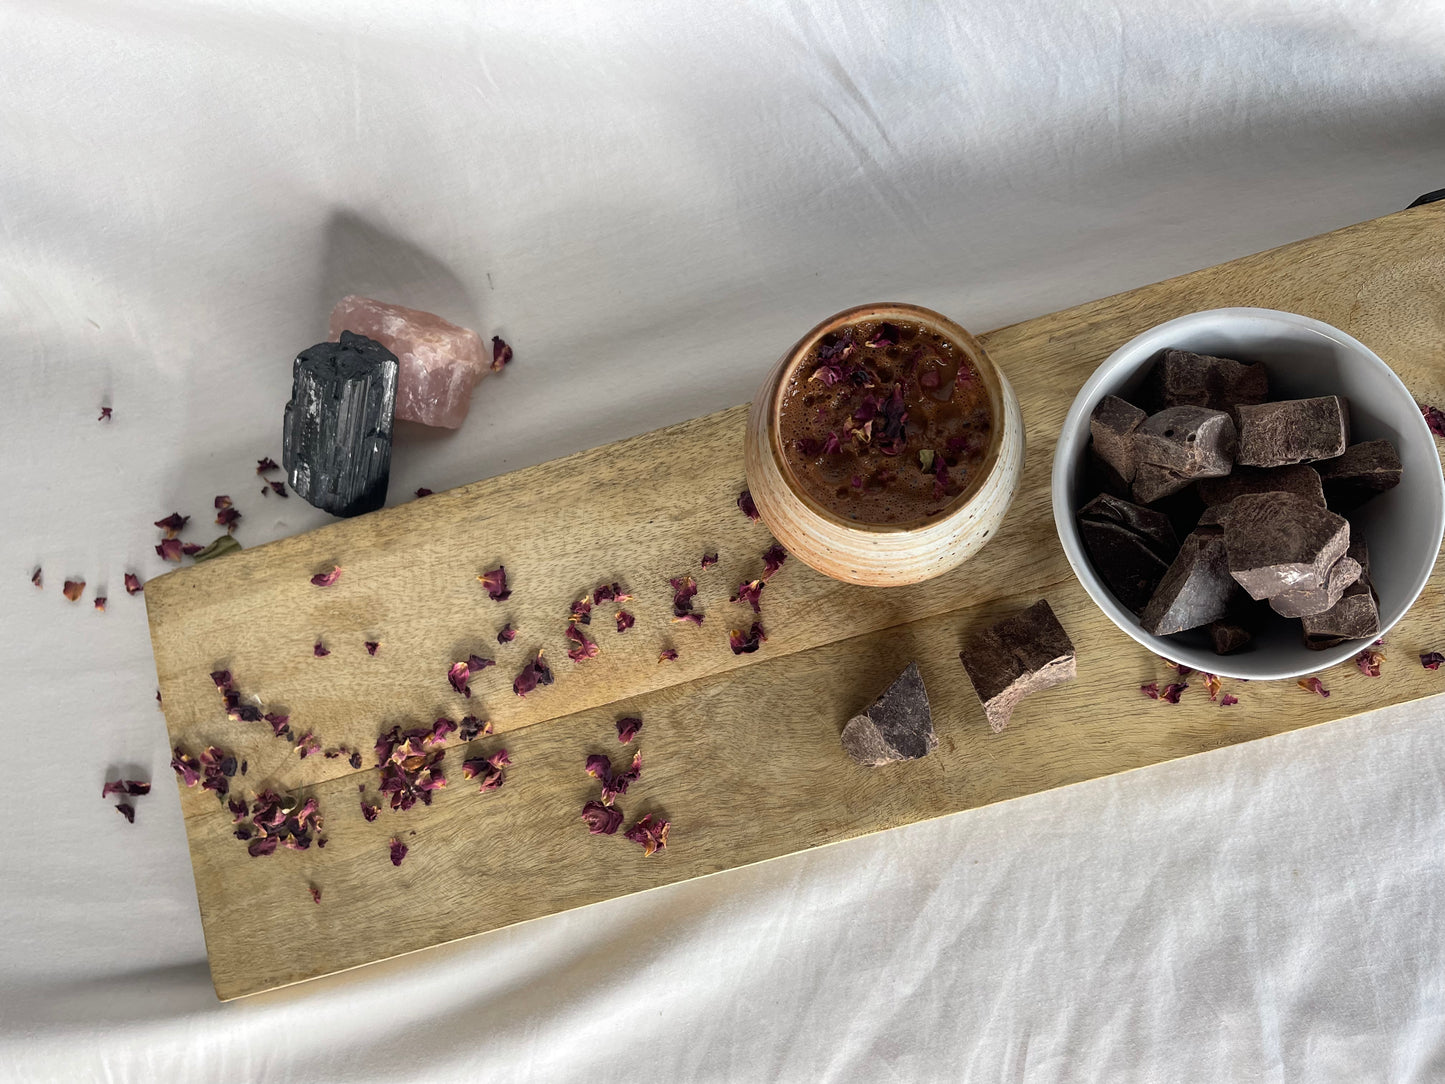 Ritual Ceremonial Cacao 